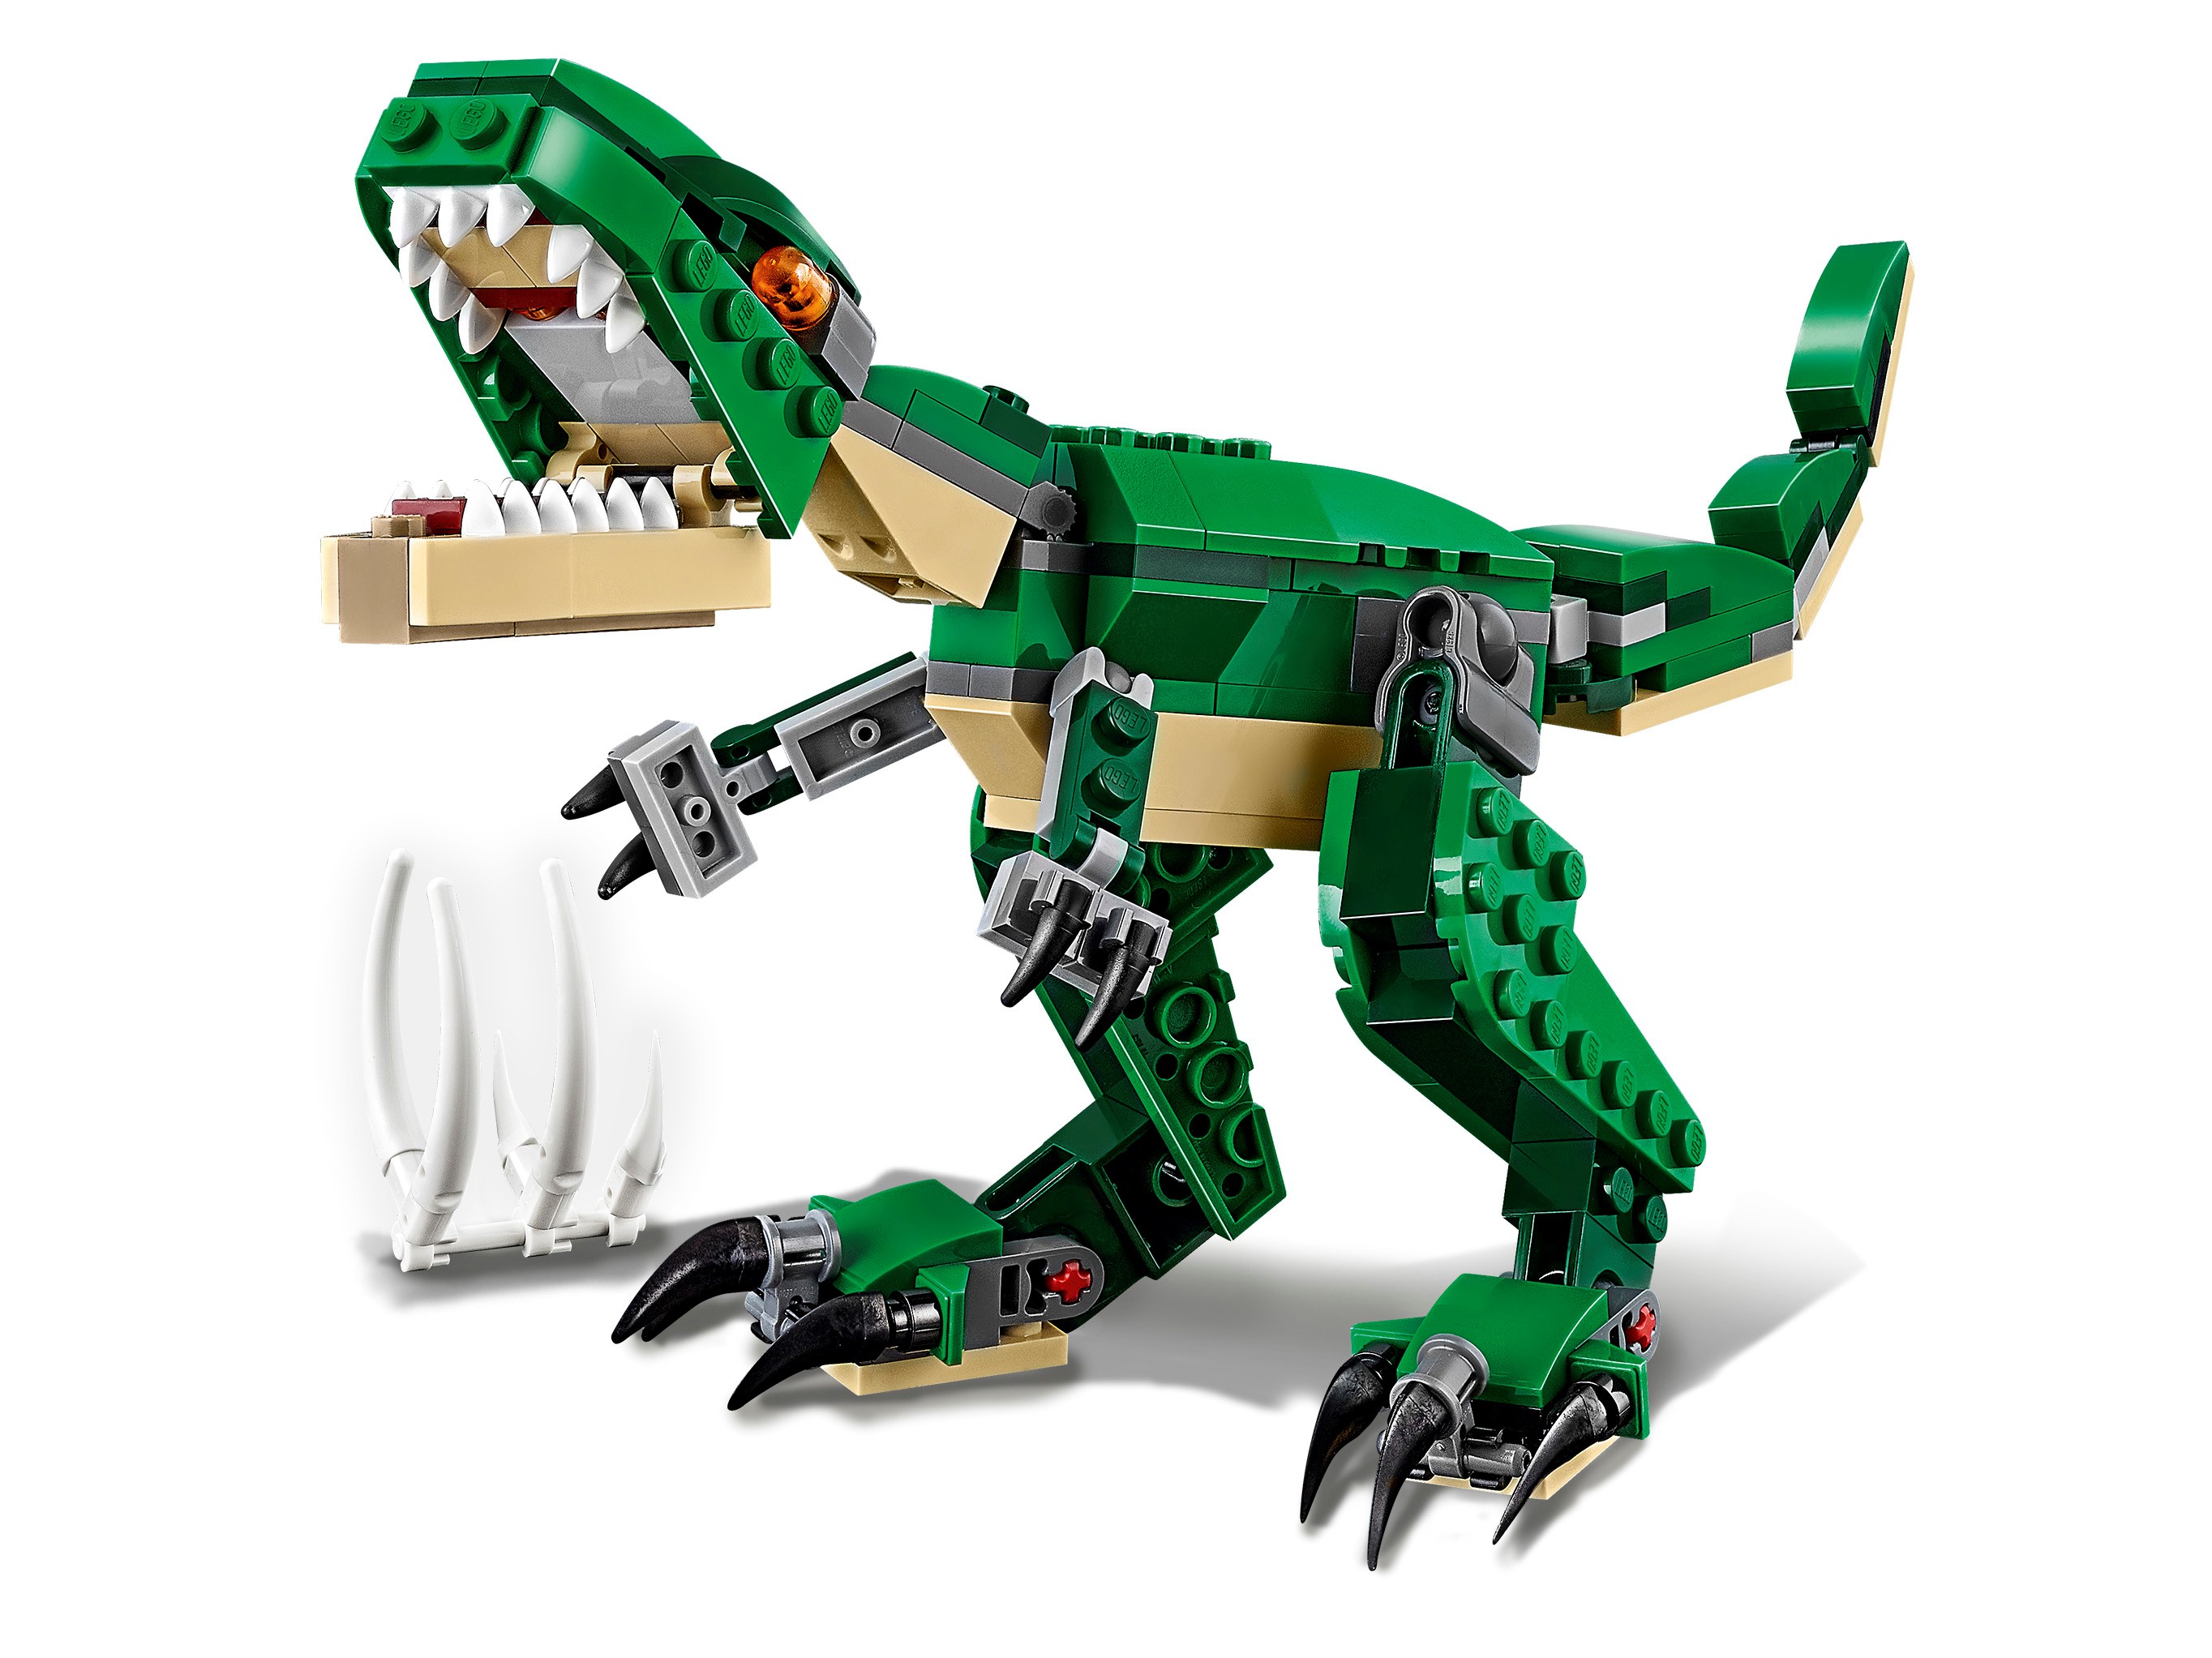 Lego Mini Moc Dinosaurs Animals Vehicles - creator 31058